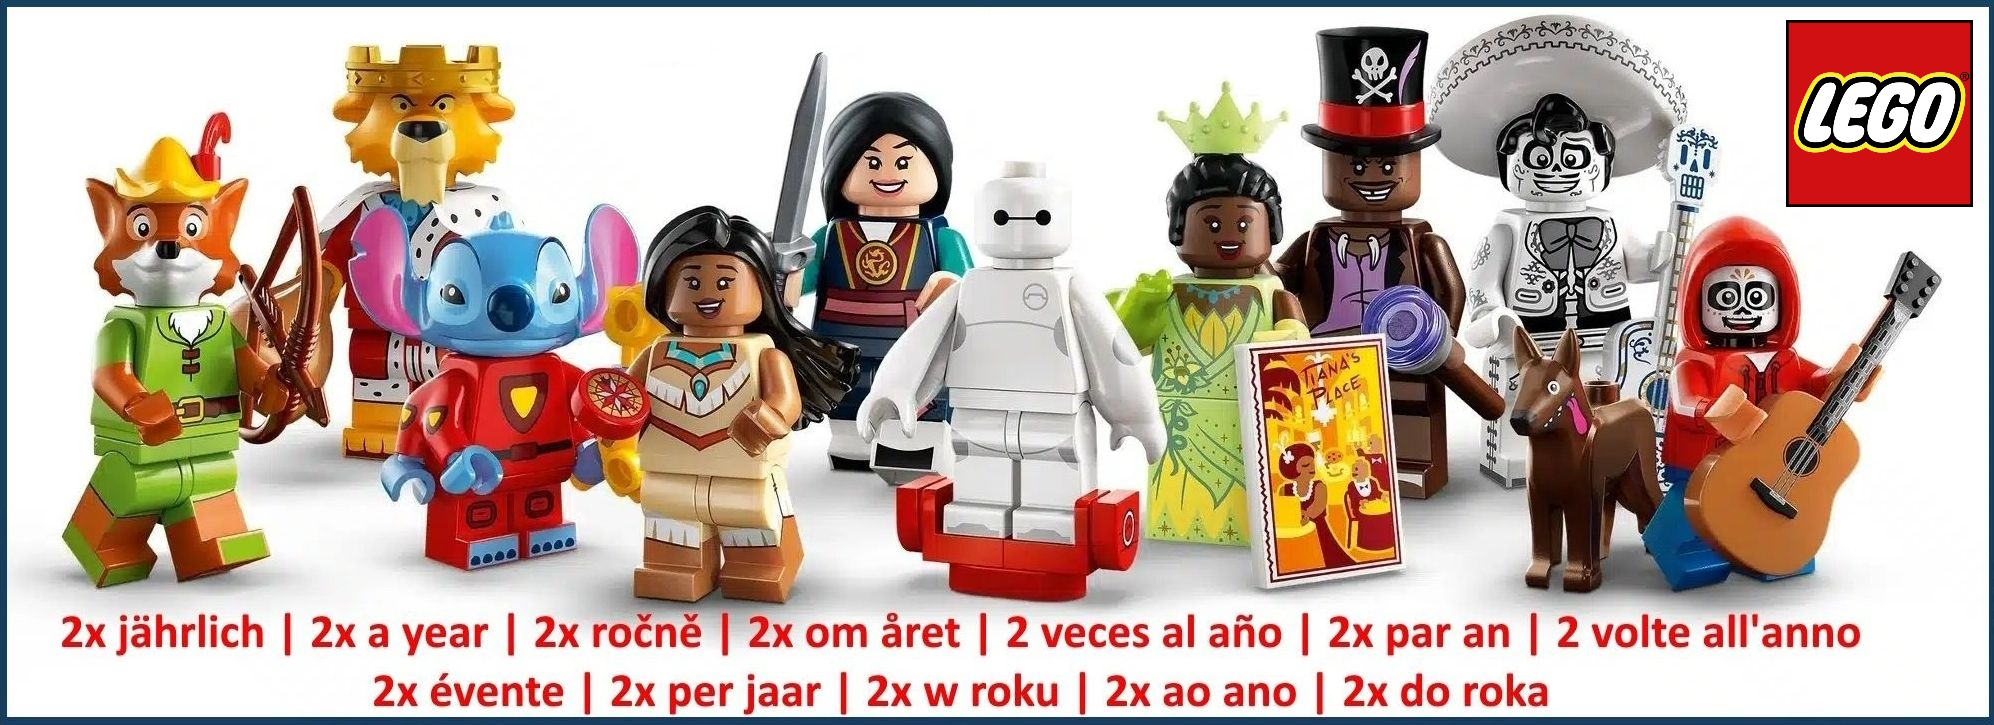 LEGO_Minifigures_Abonnement_LEGO_Minifiguren_Abo_LEGO_Minifiguren_Abonnement_LEGO_Minifiguren_Online-Shop_LEGO_Online-Shop_BRICKMO_neu40vTVerjf2zsI